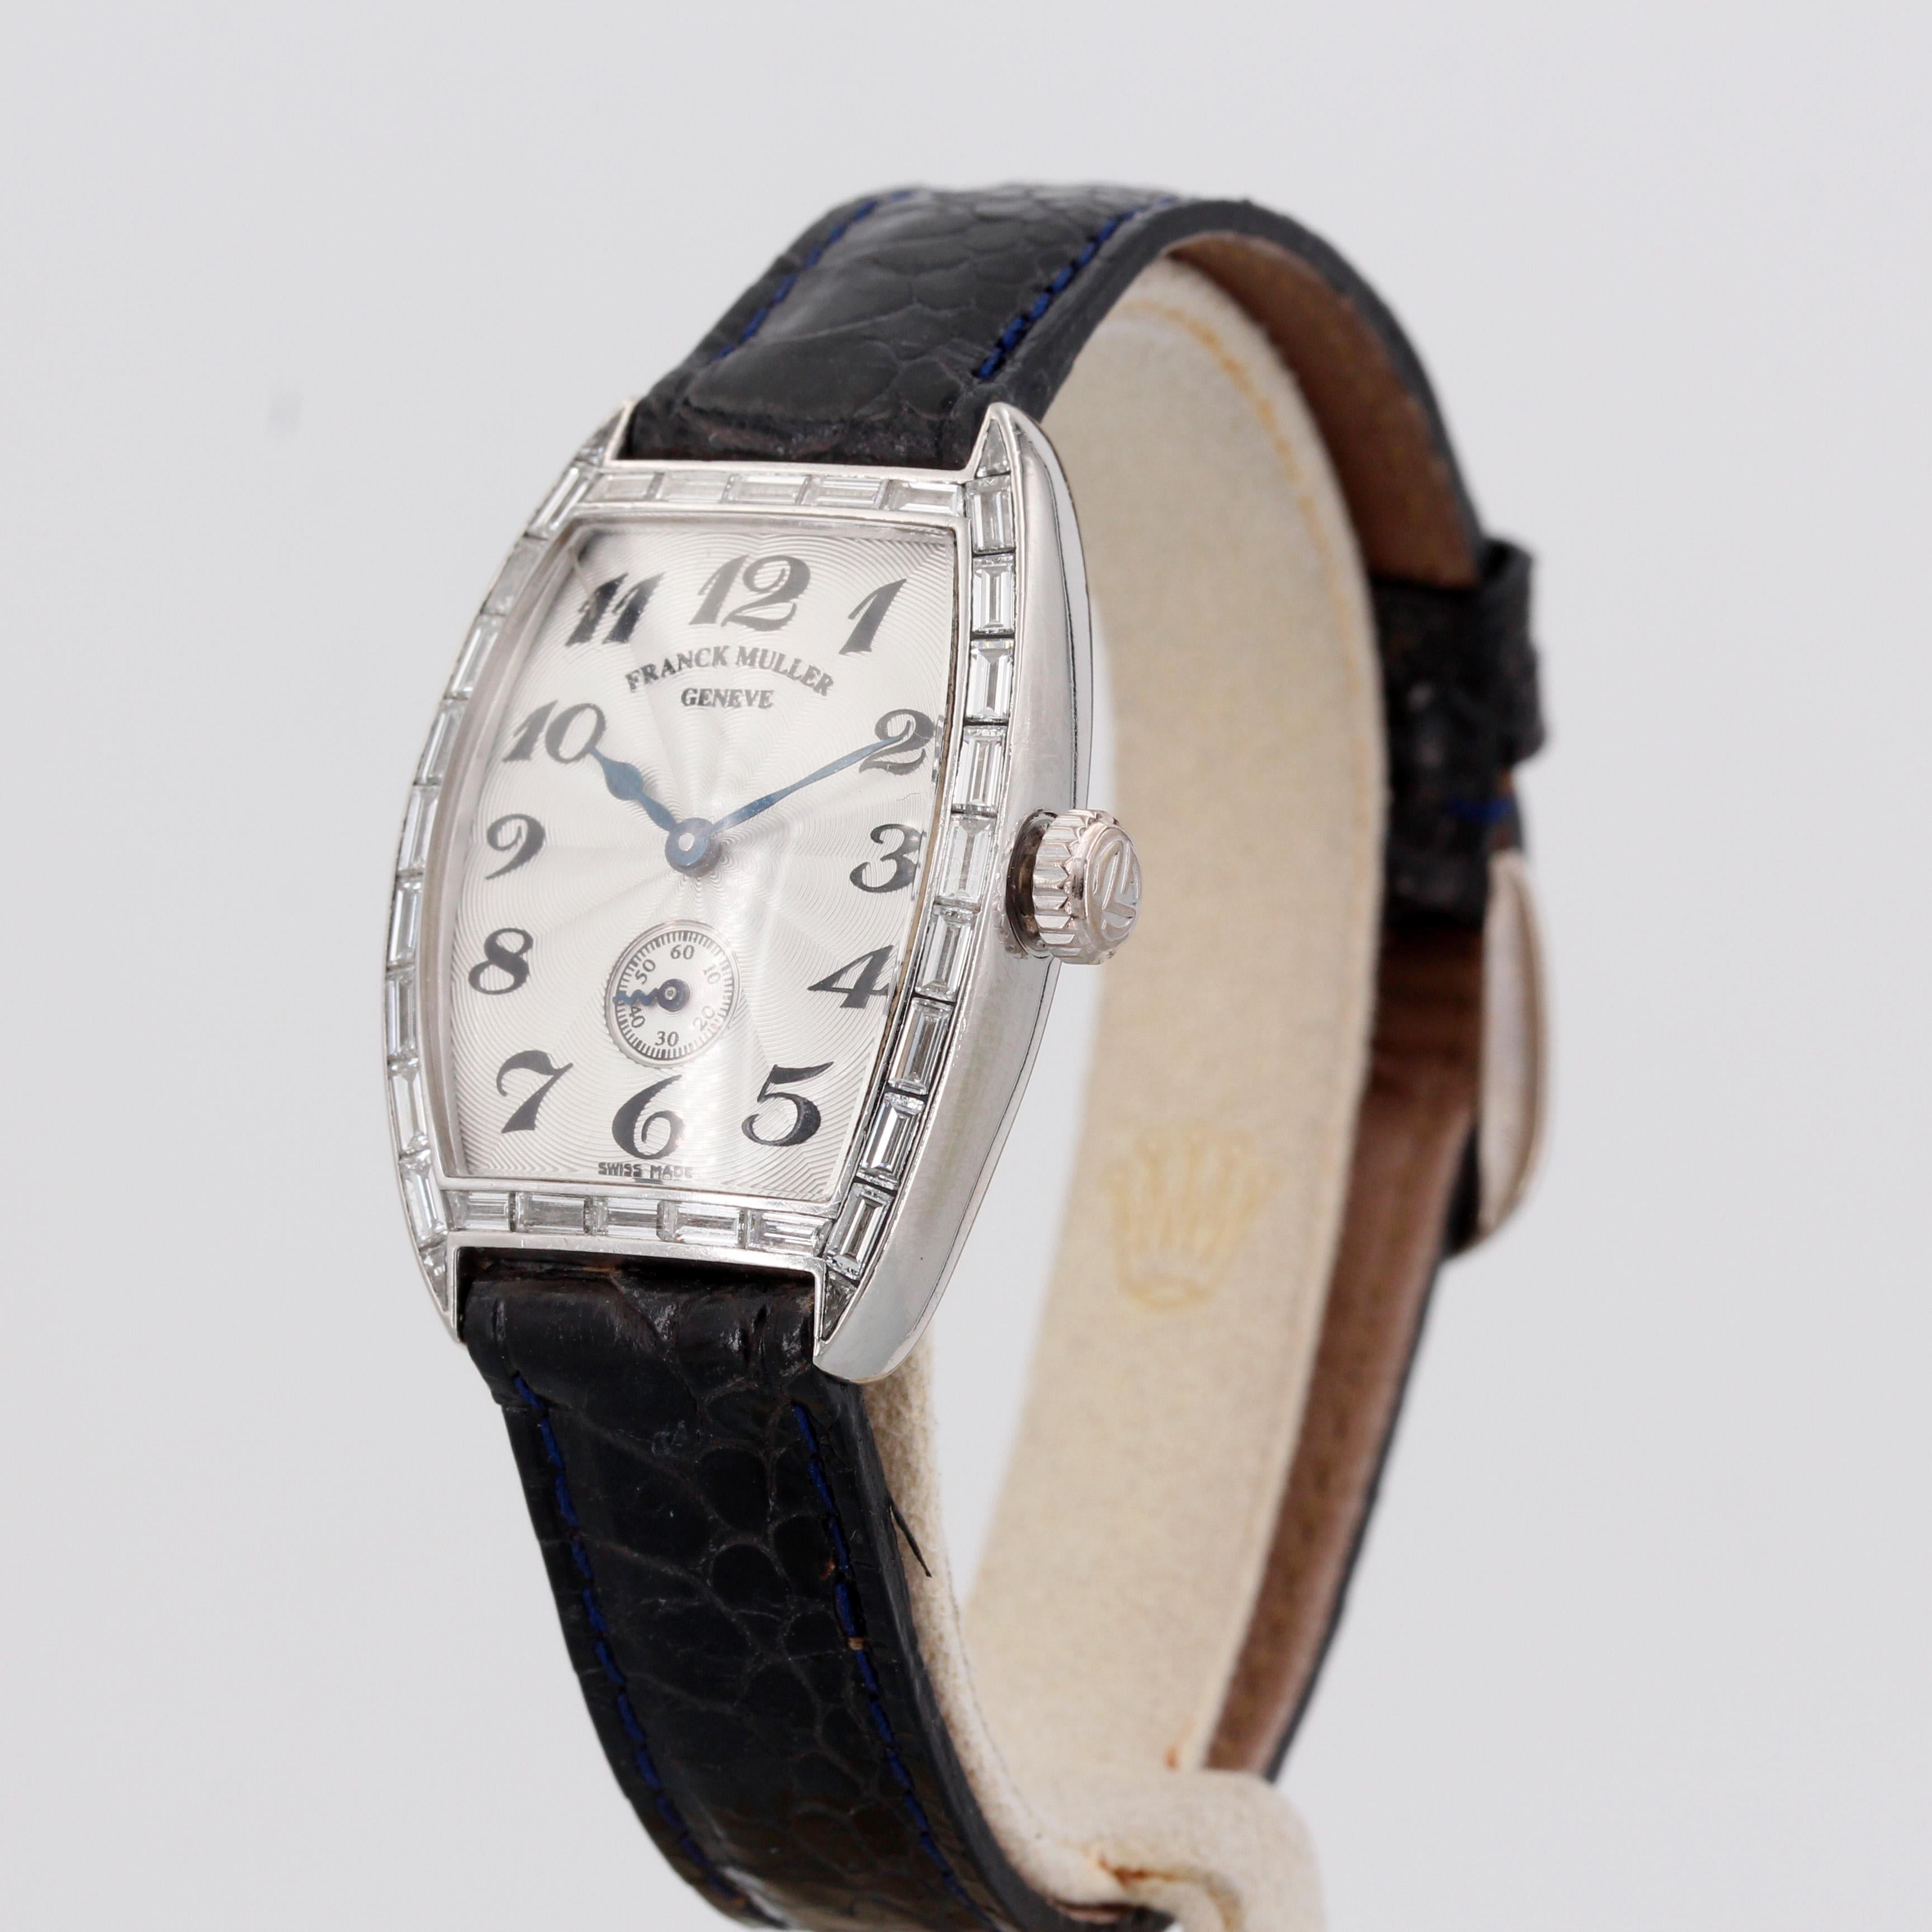 Franck Muller Vintage Ladies Watch
Reference: 1750 S6 BAG
Material: Platinum
Movement: Manual winding
Diameter: 25x35mm
Dial: Silver
Bracelet: Leather
Diamonds: Baguette Cut